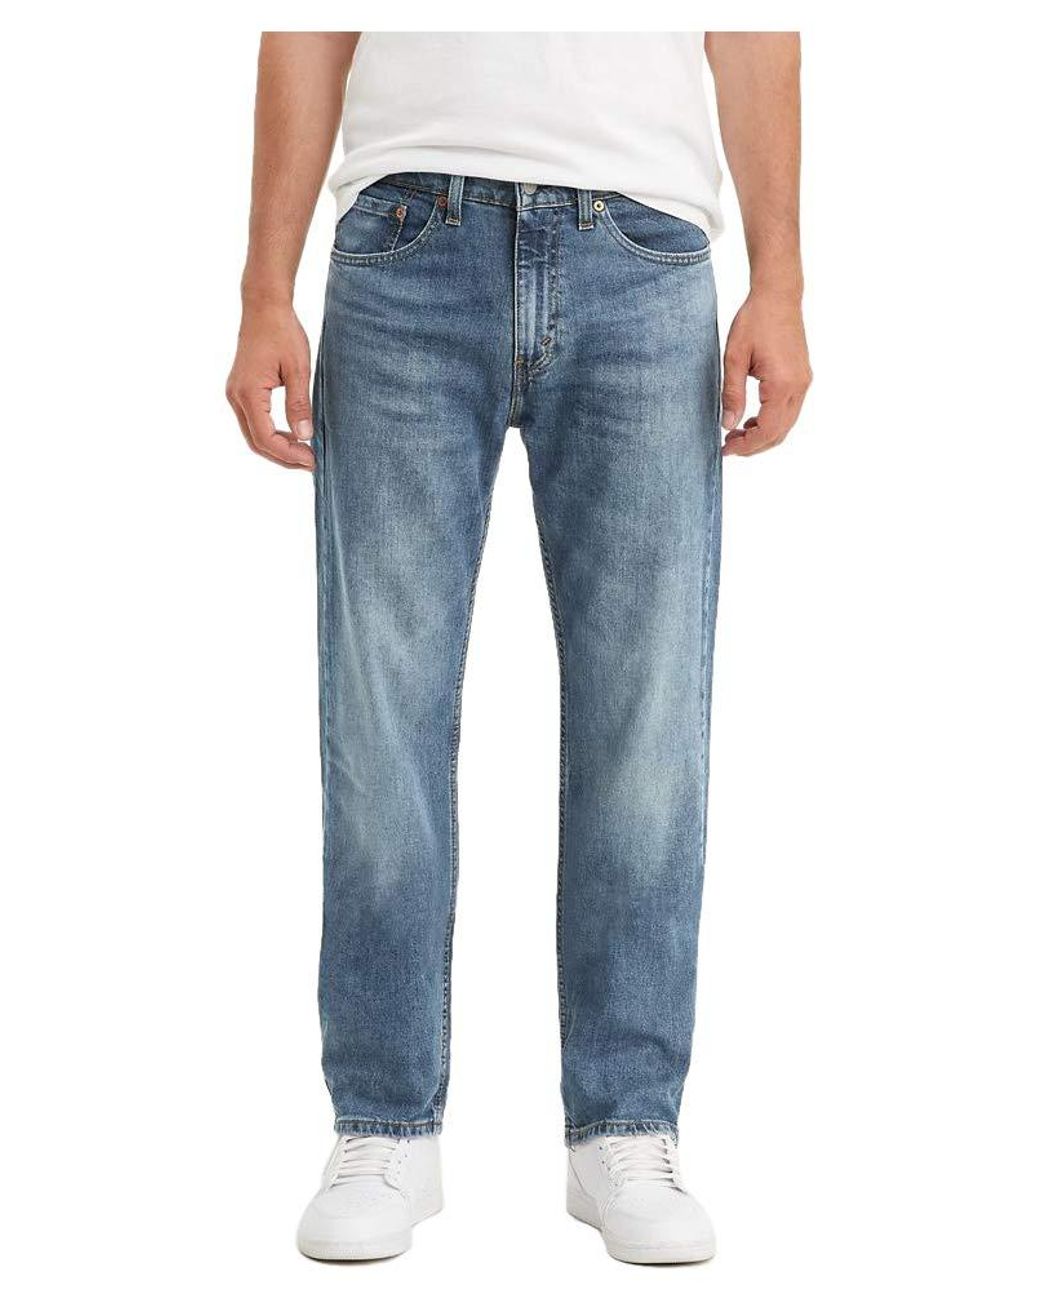 Levi's Denim 505 Regular Fit Jeans in Blue for Men - Lyst